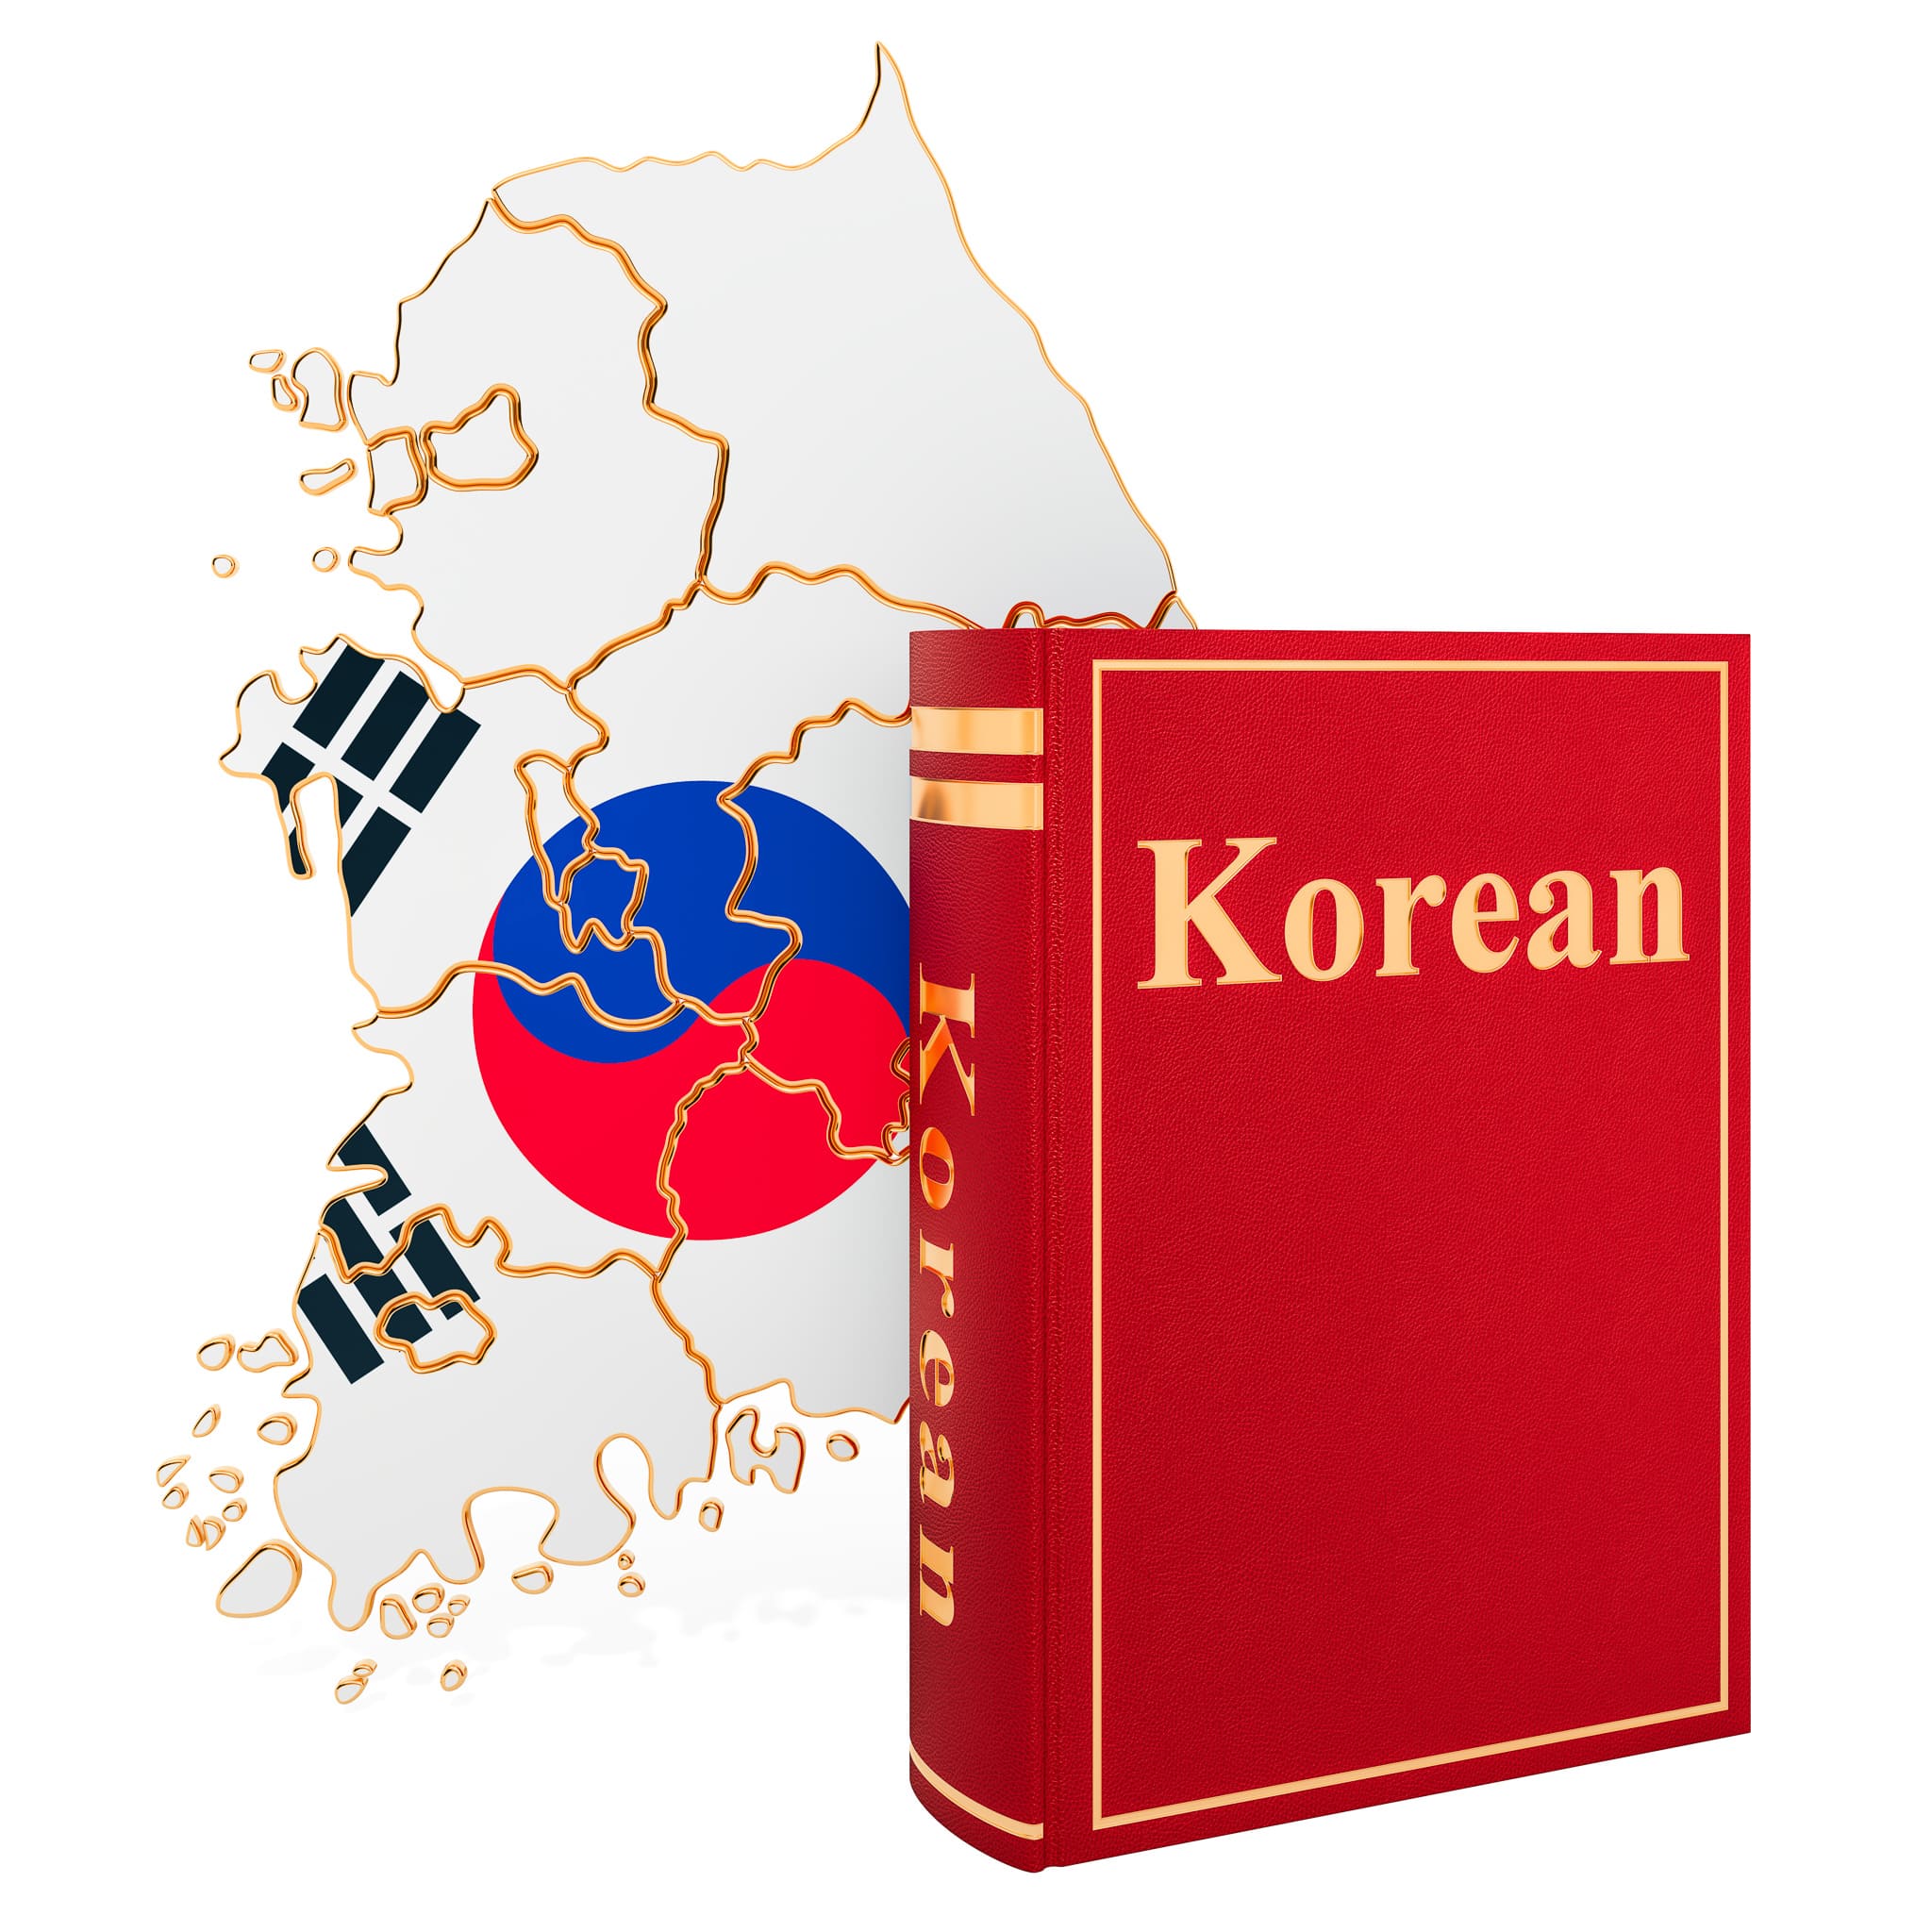 korean words